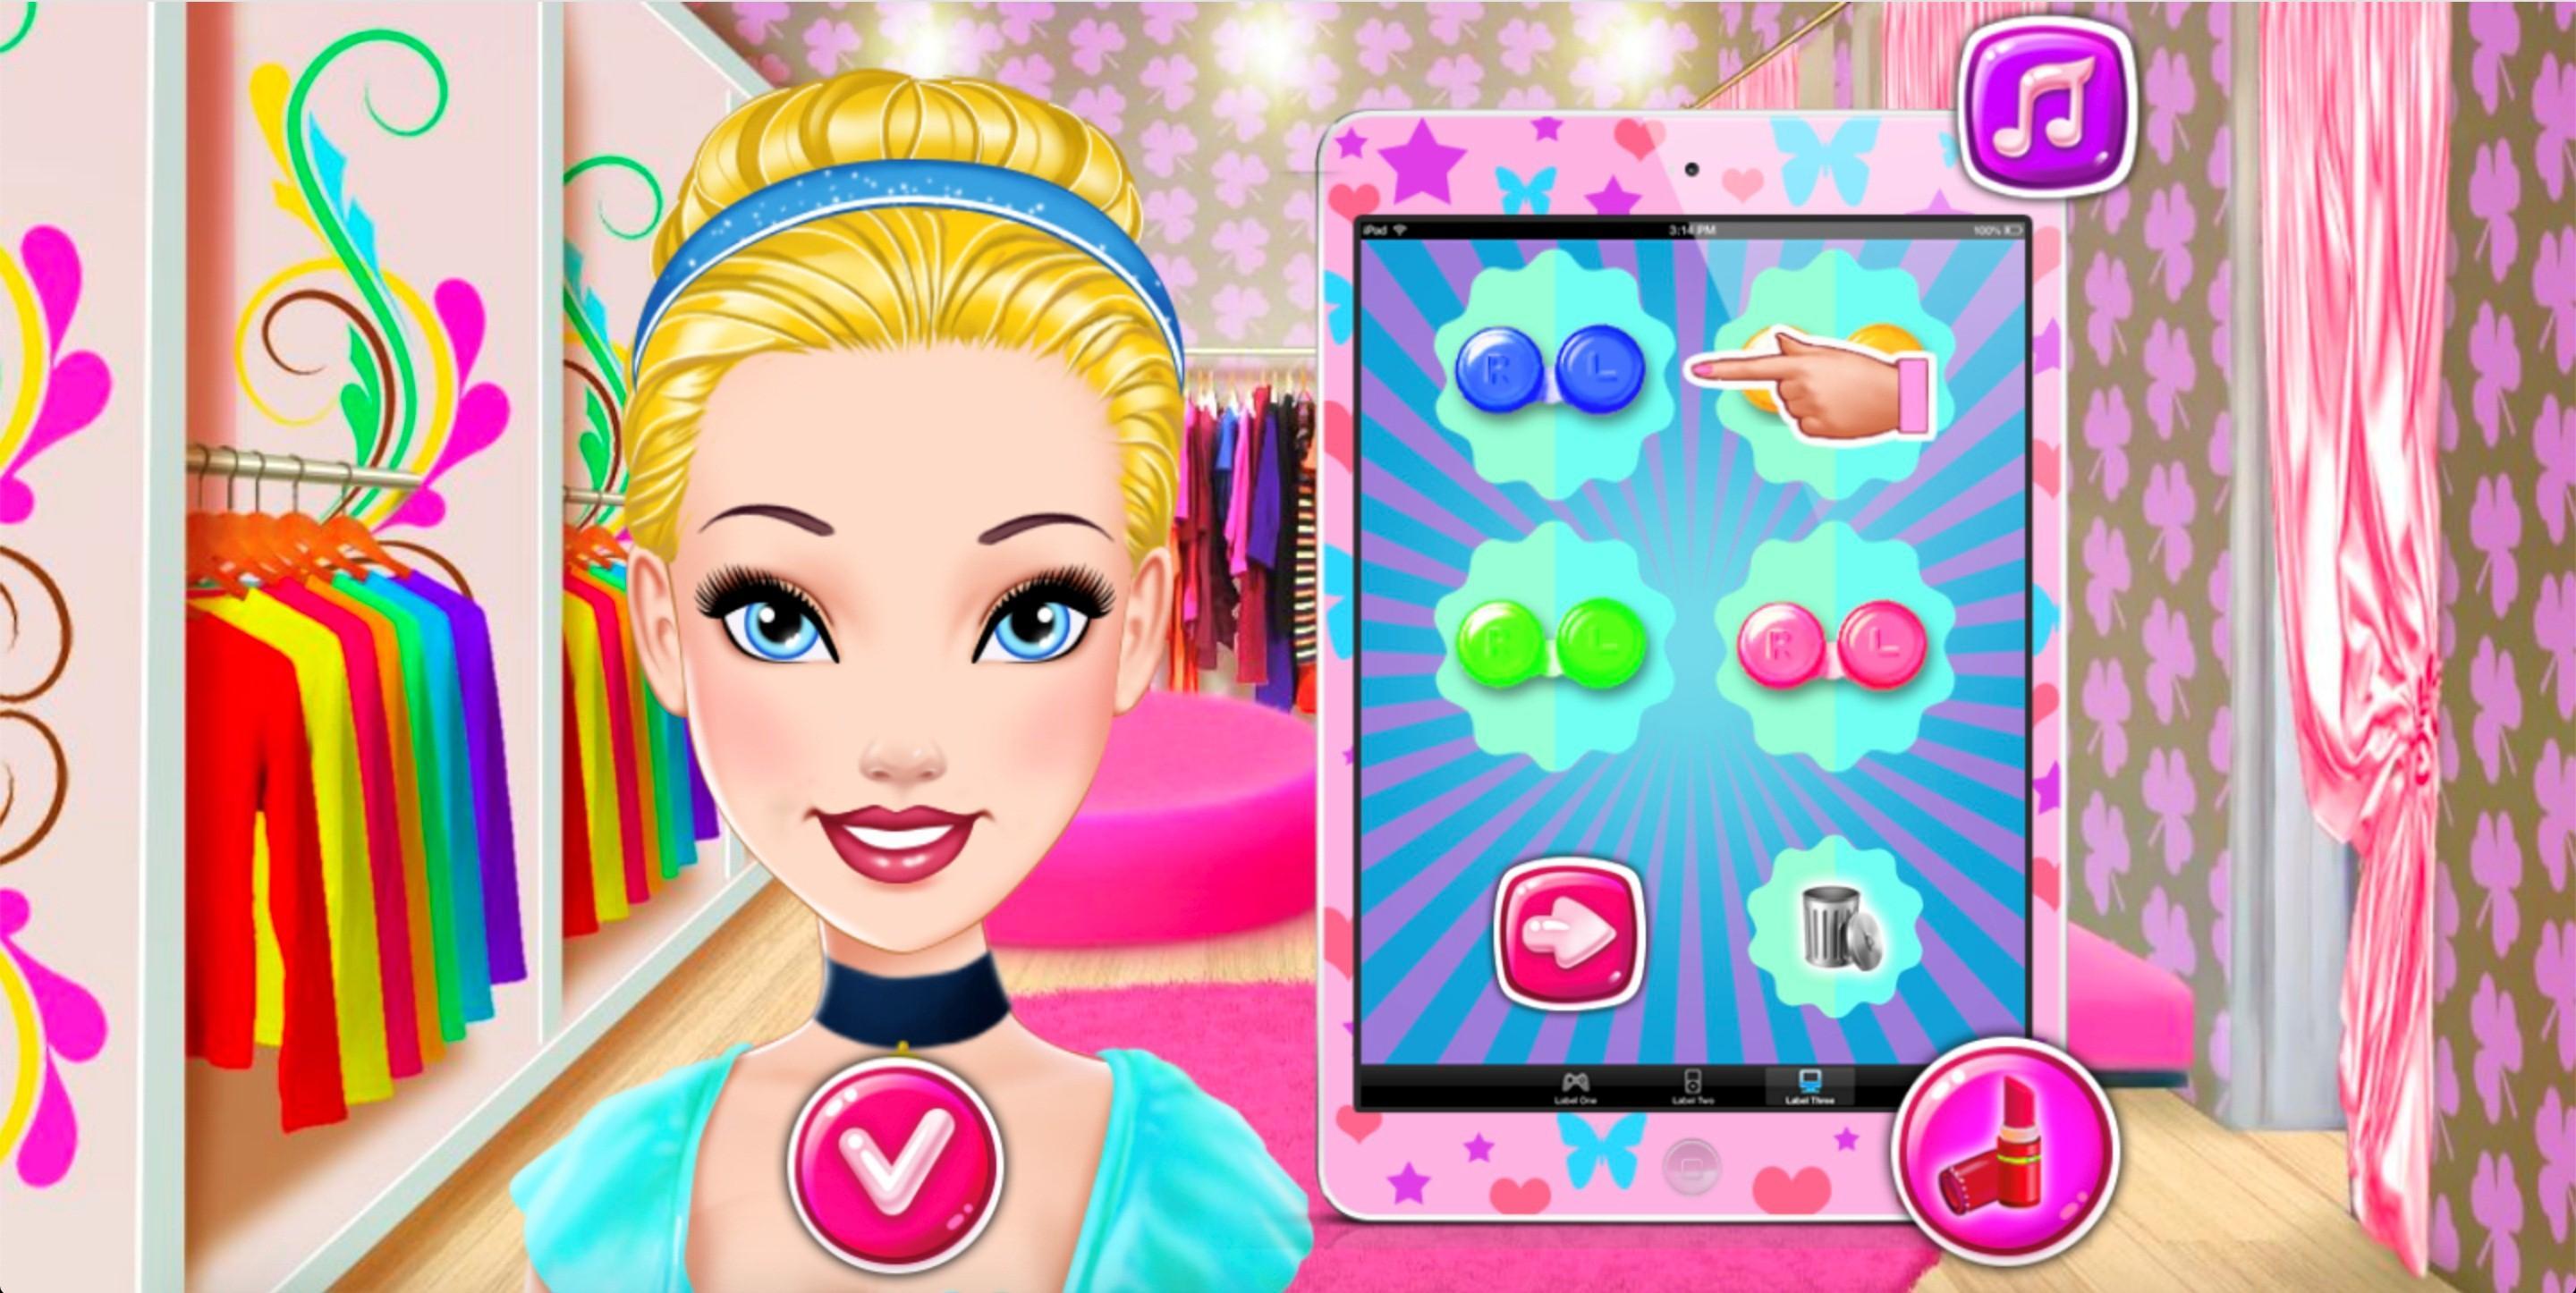 Cinderella dress up, Princess fashion makeup games APK for Android Download